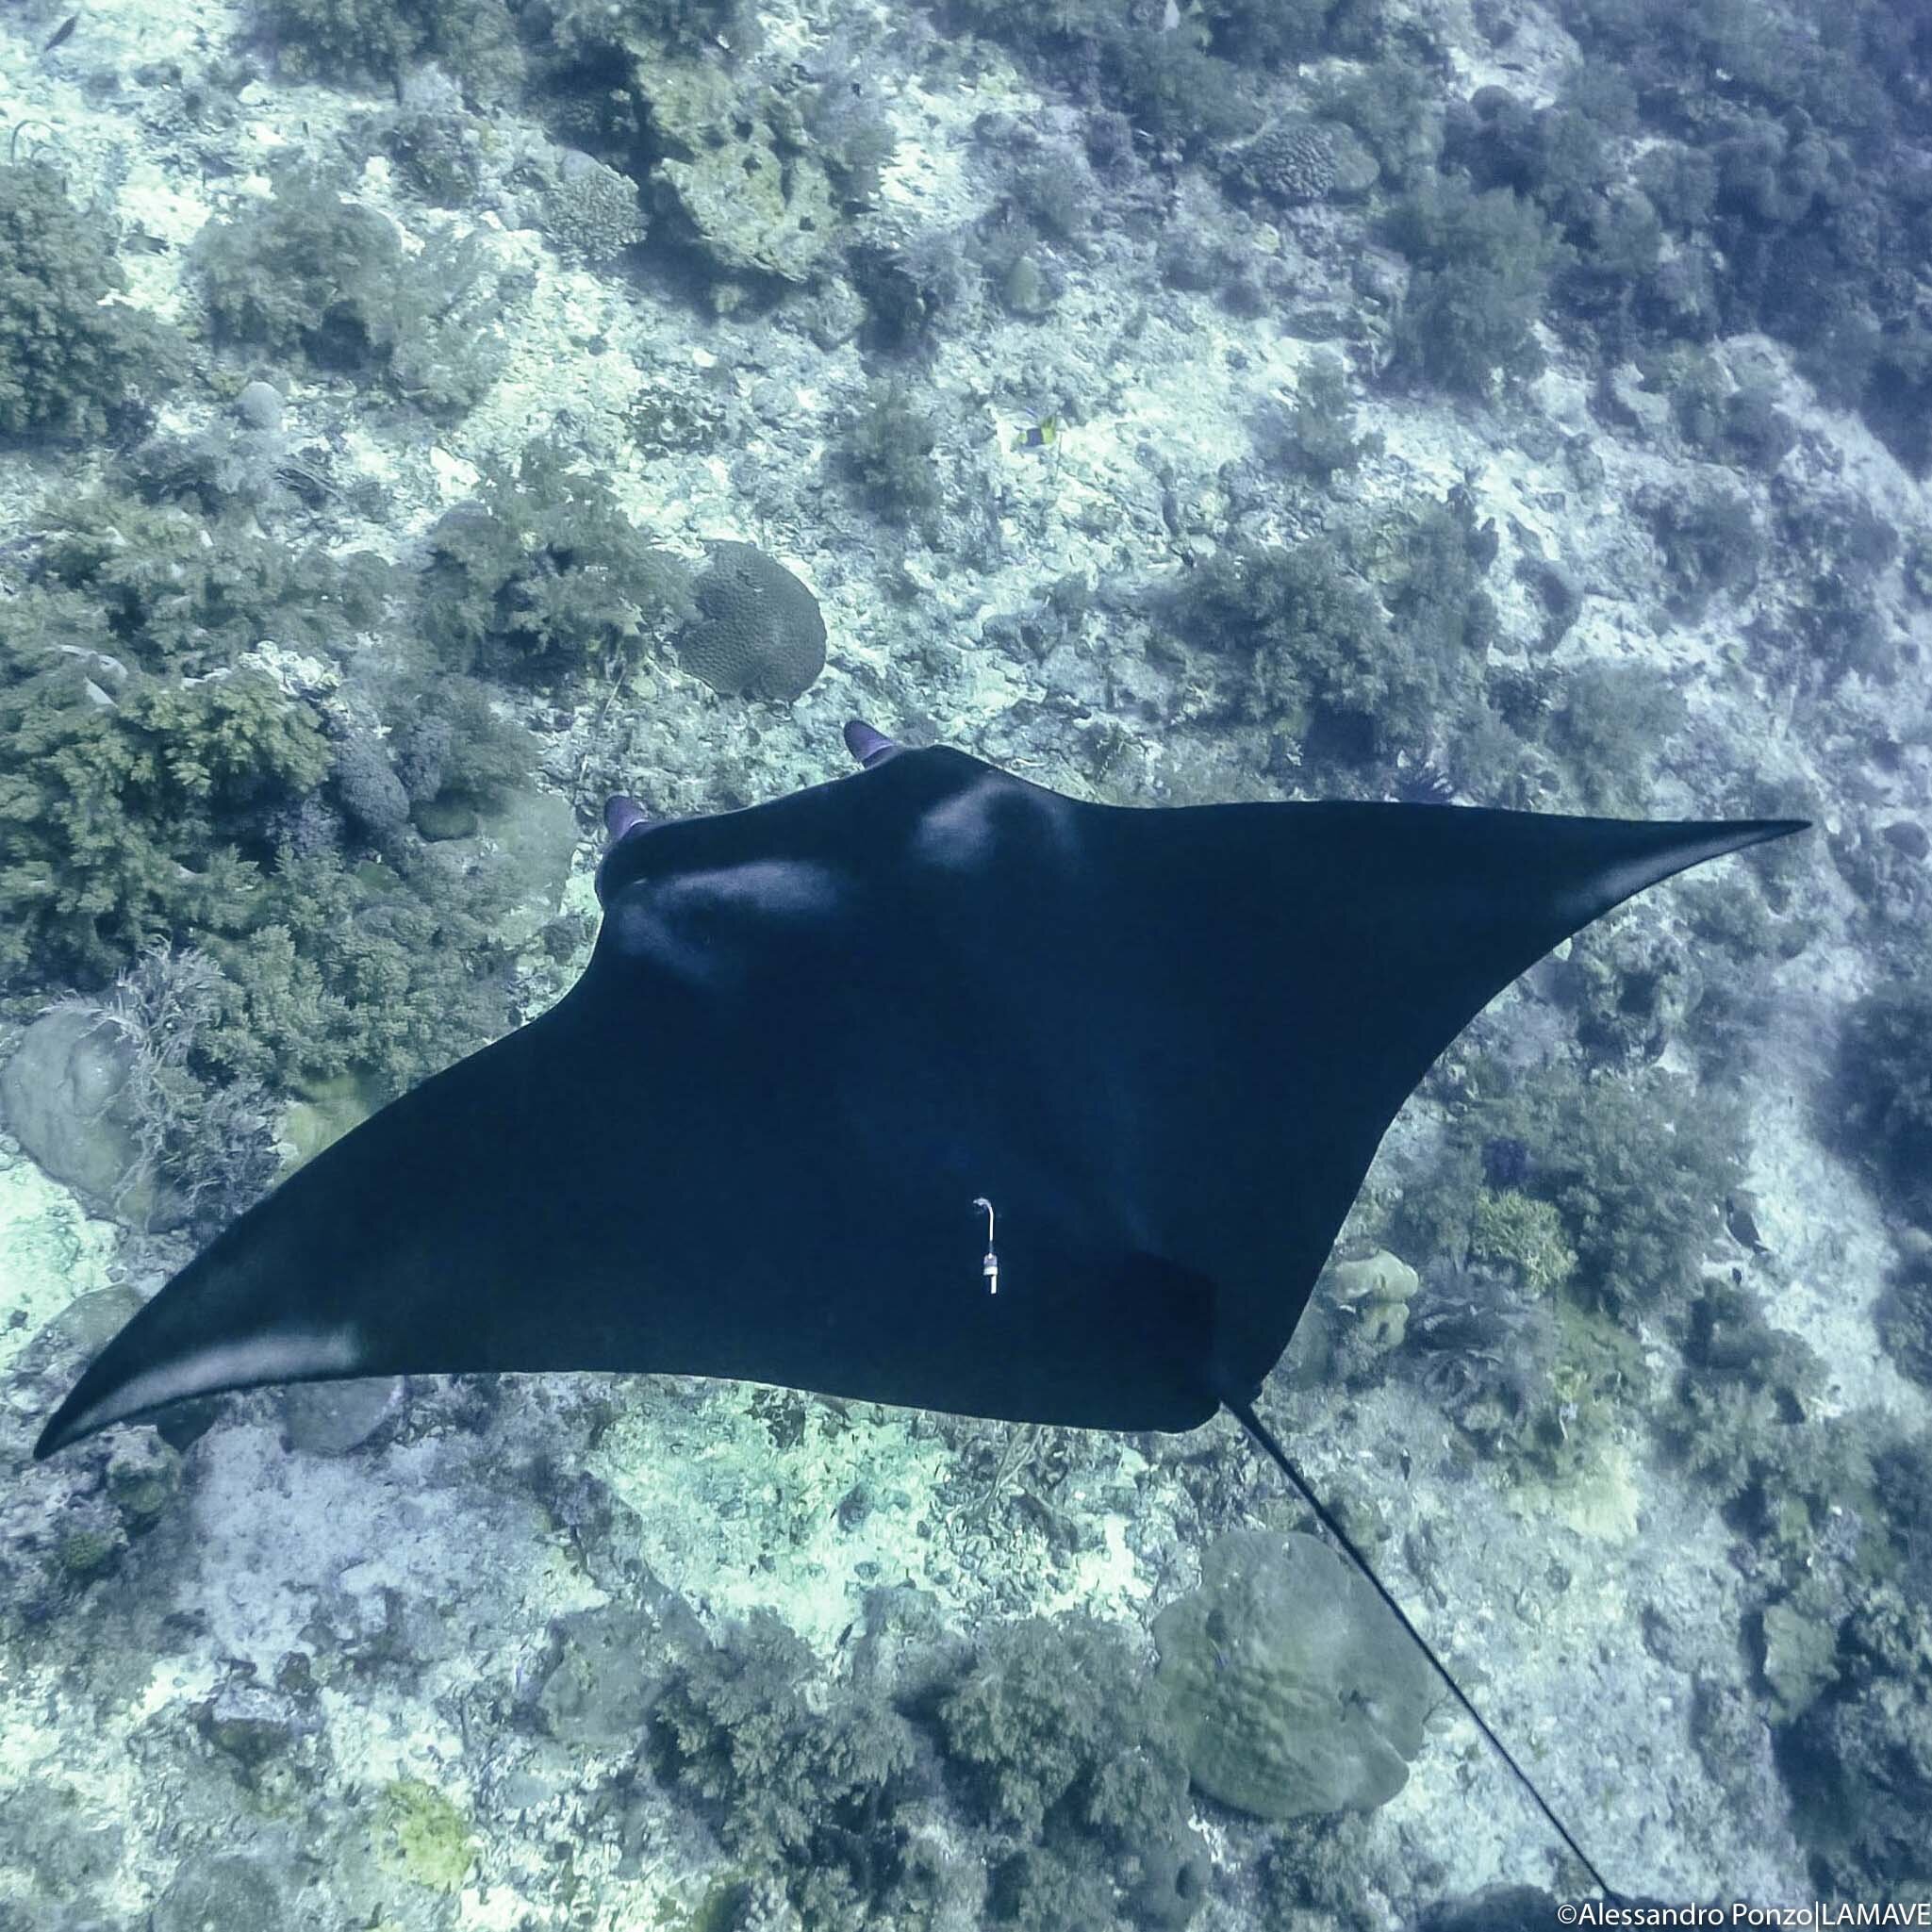 manta ray with a acoustic tag